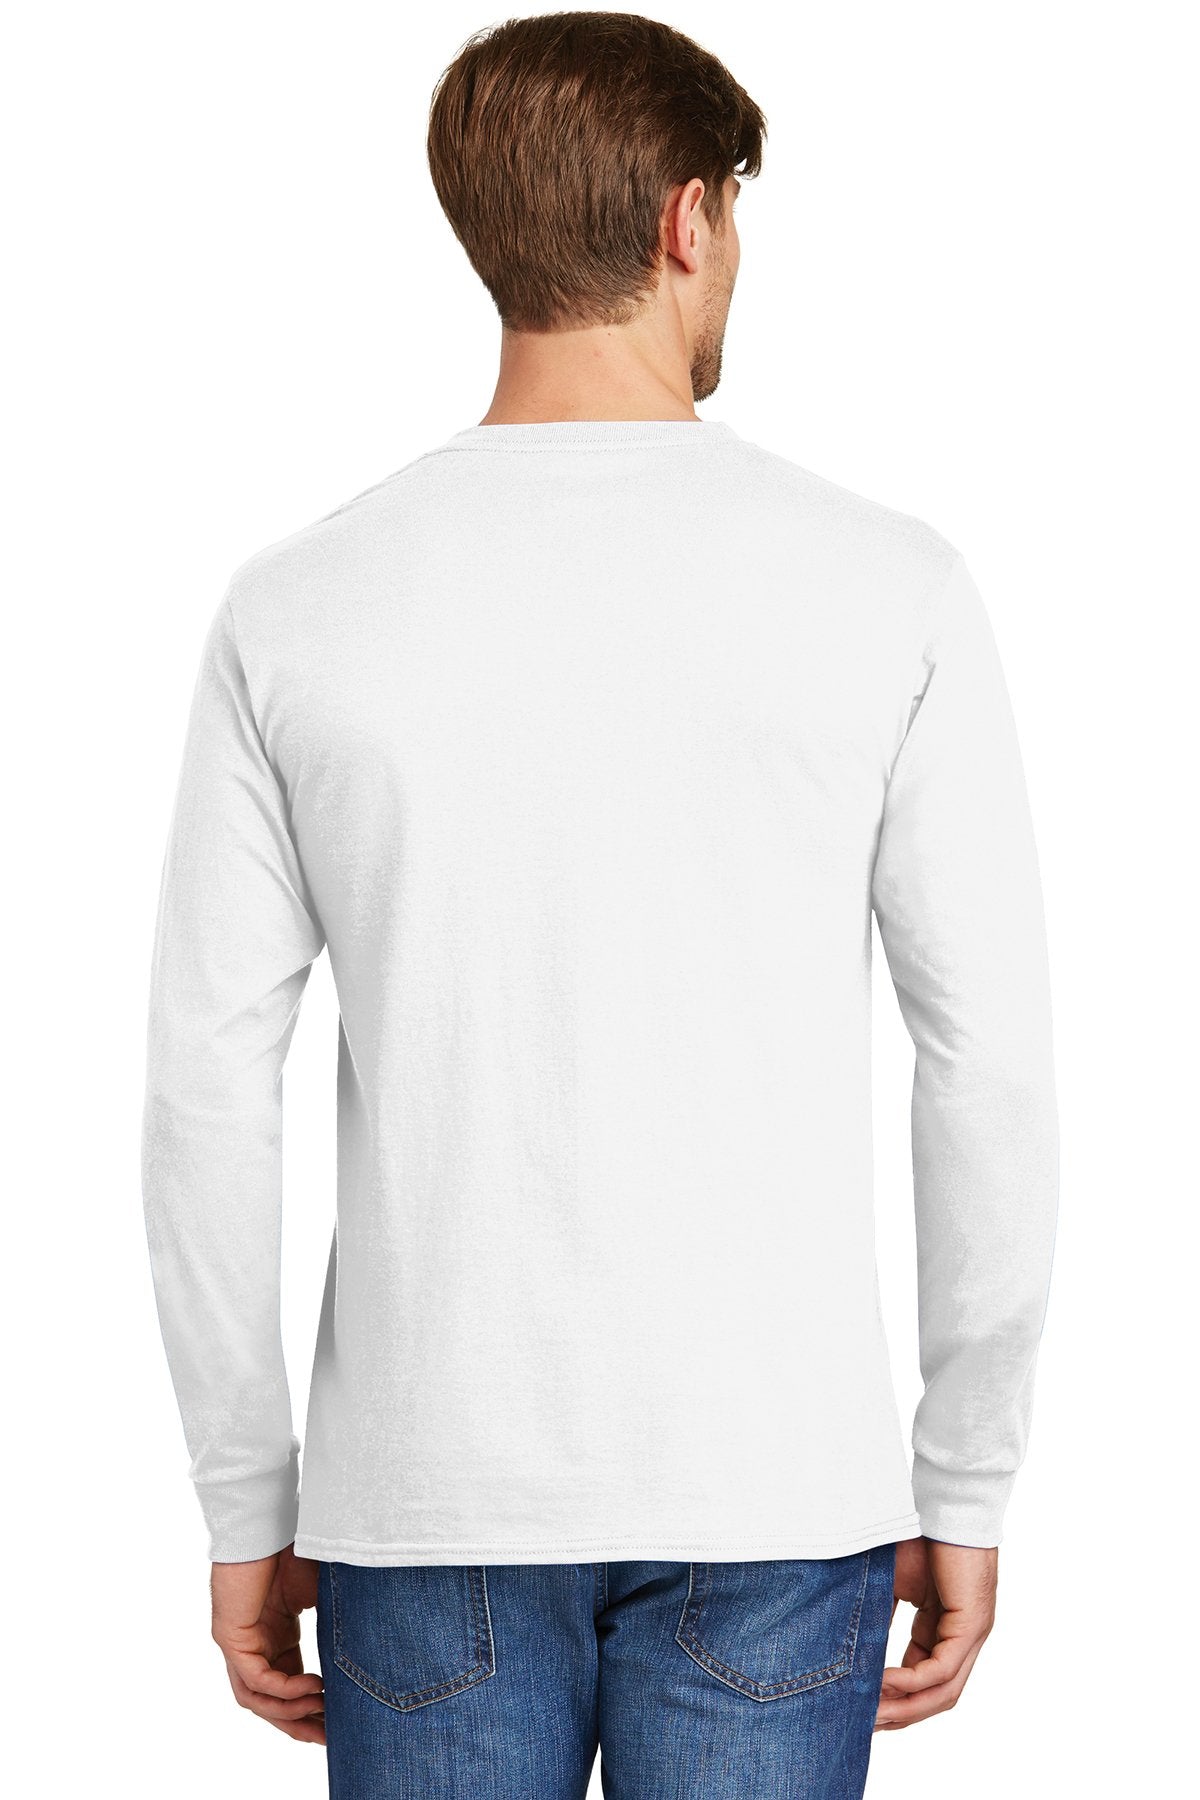 hanes tagless cotton long sleeve t shirt 5586 white